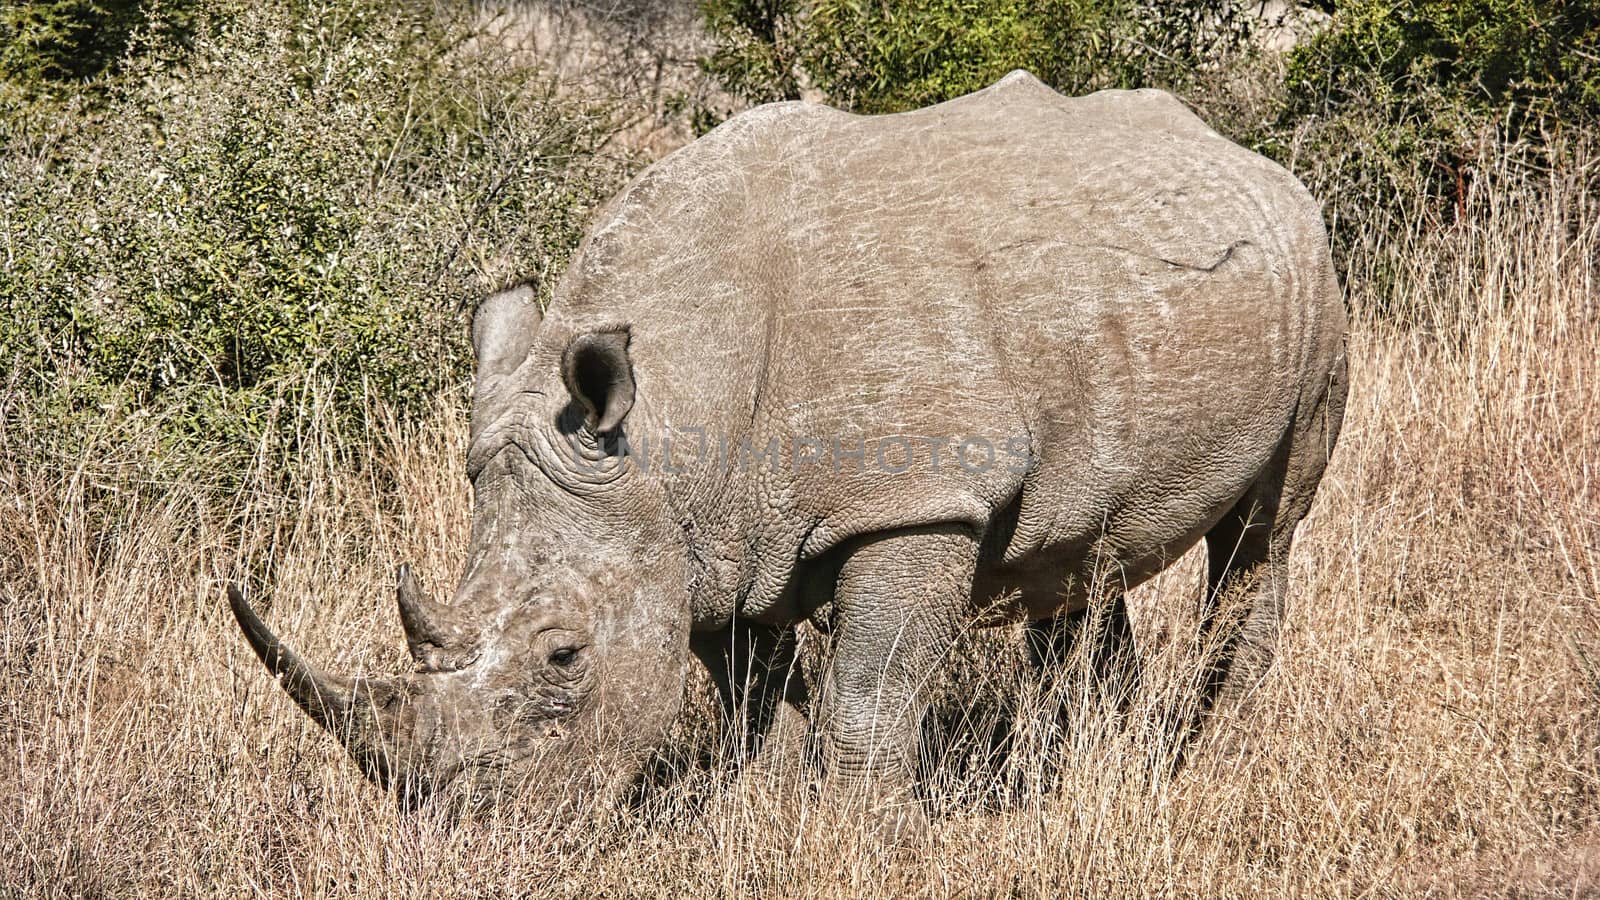 Rhino in Africa eating grass